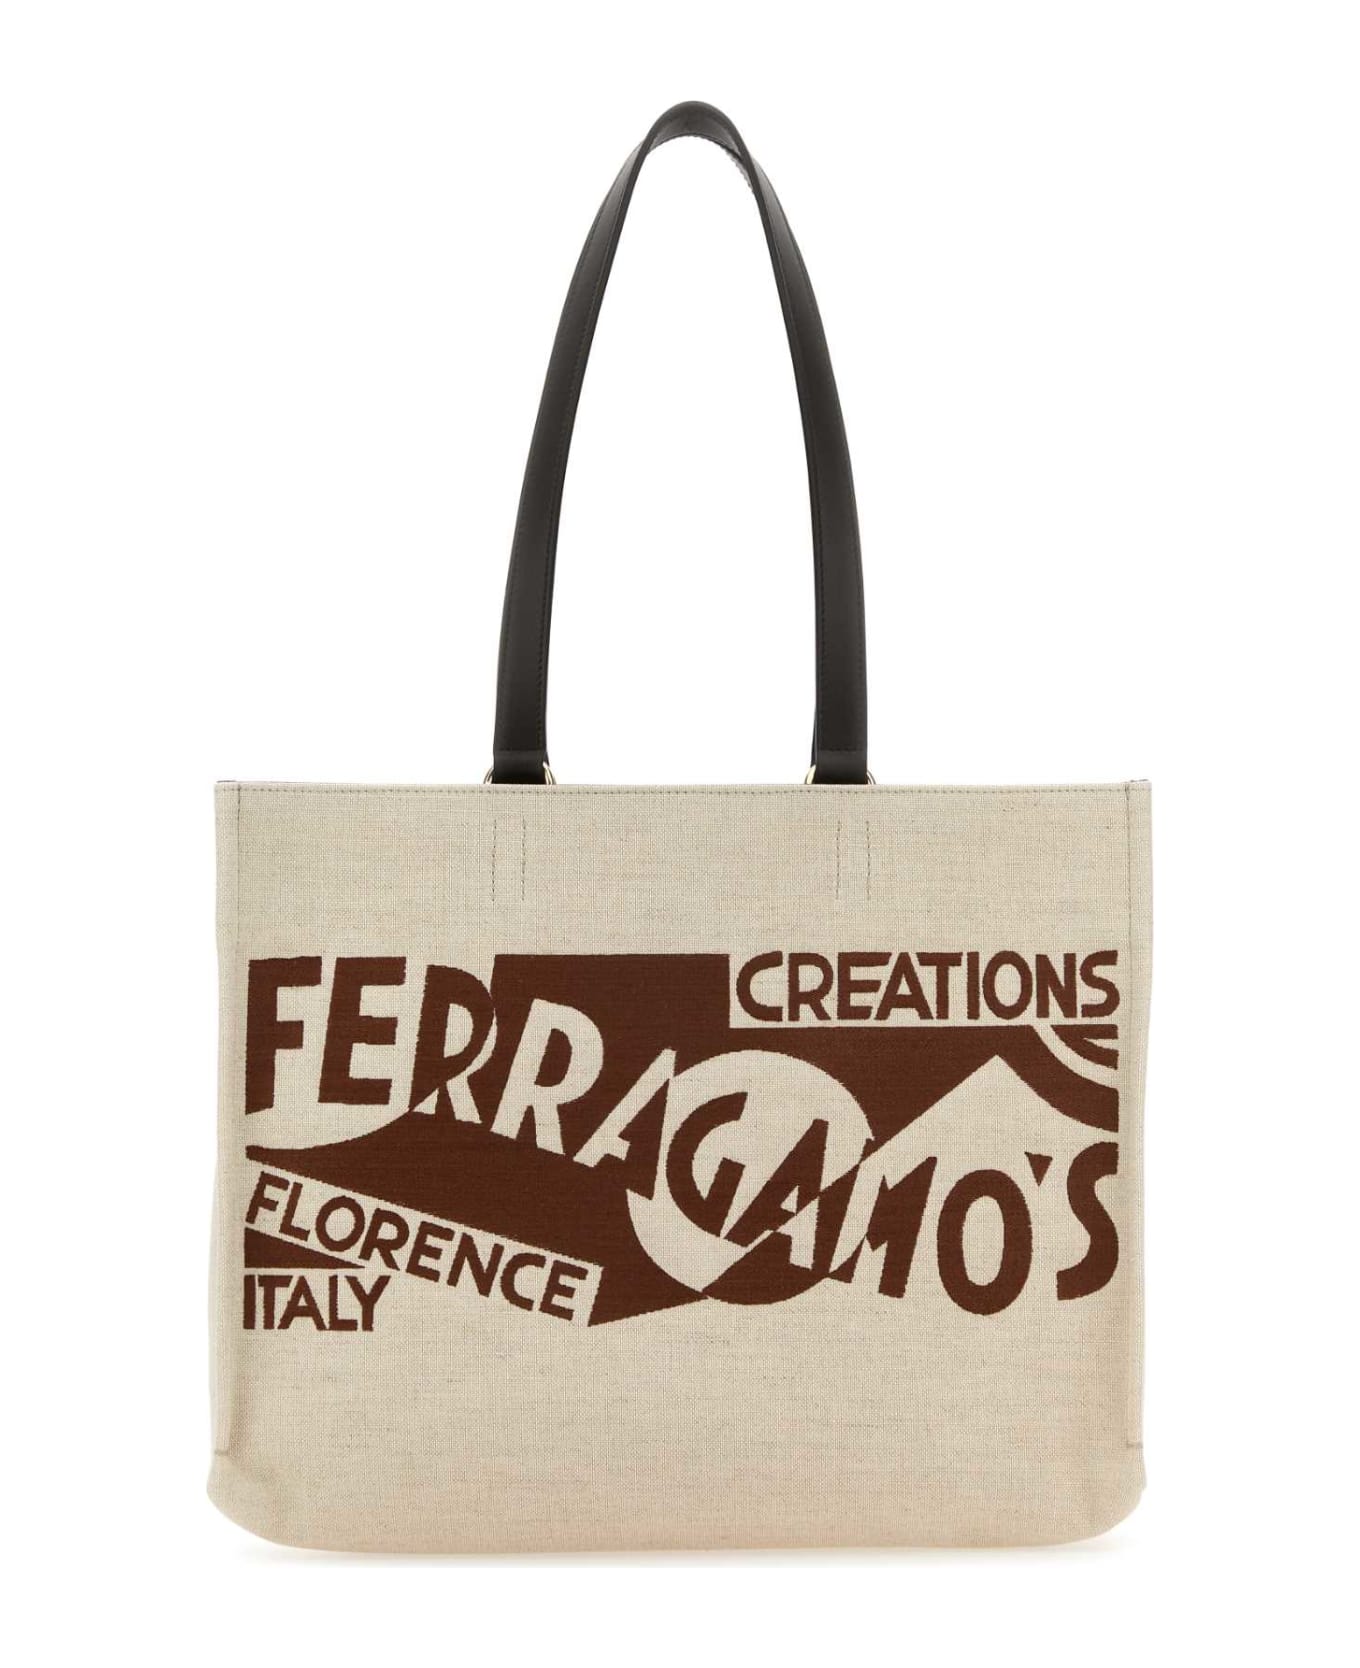 Ferragamo Sand Canvas Shopping Bag - TESTADIMORO